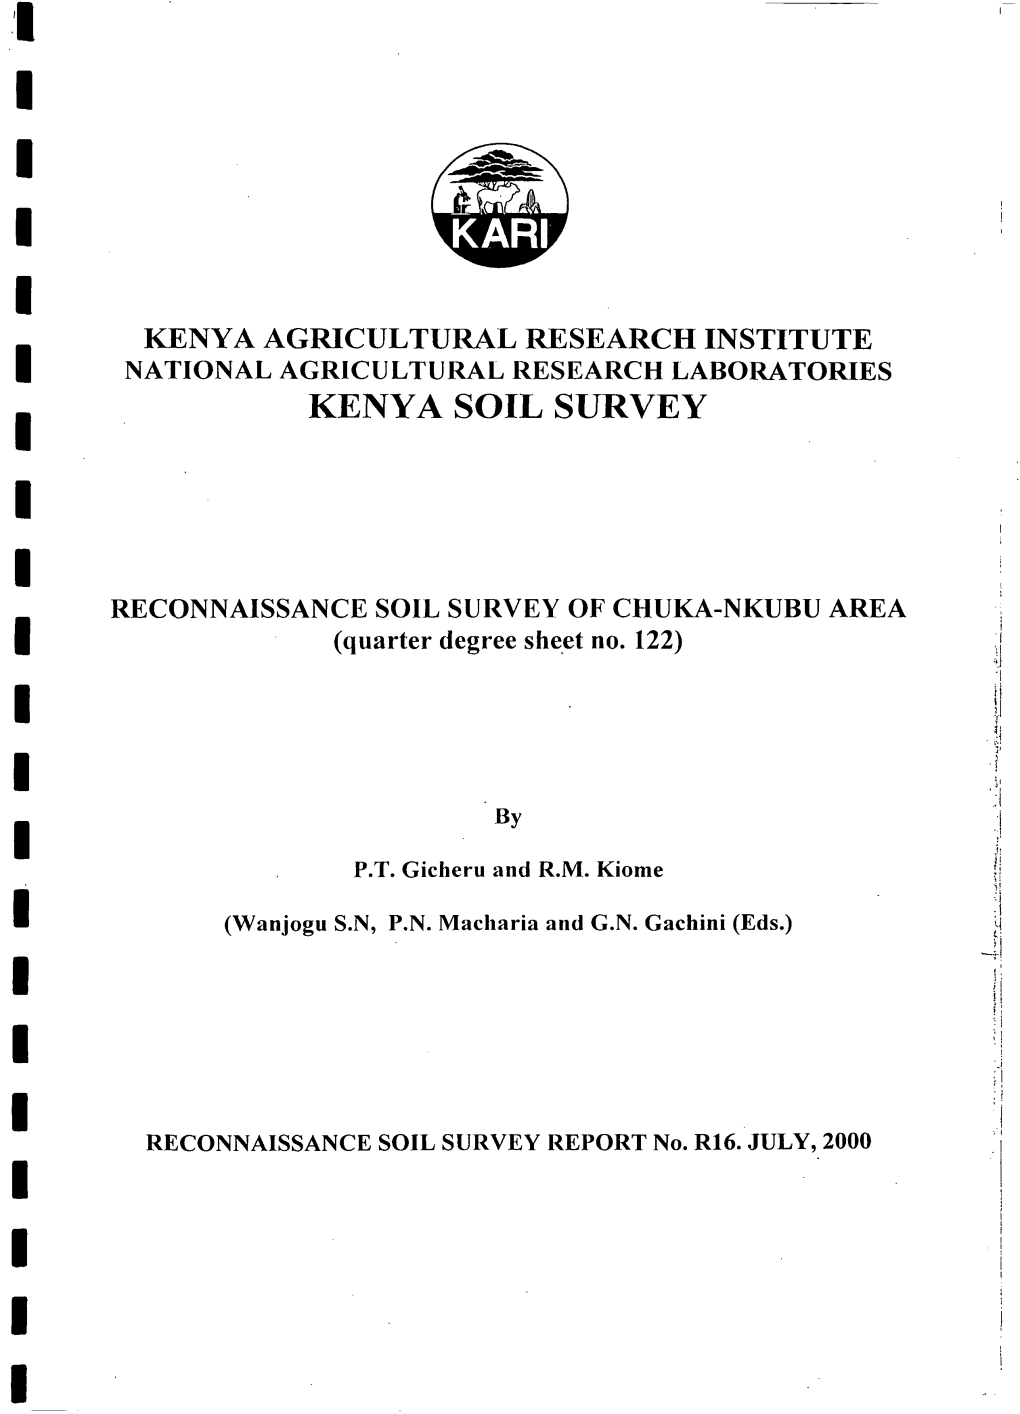 Kenya Soil Survey